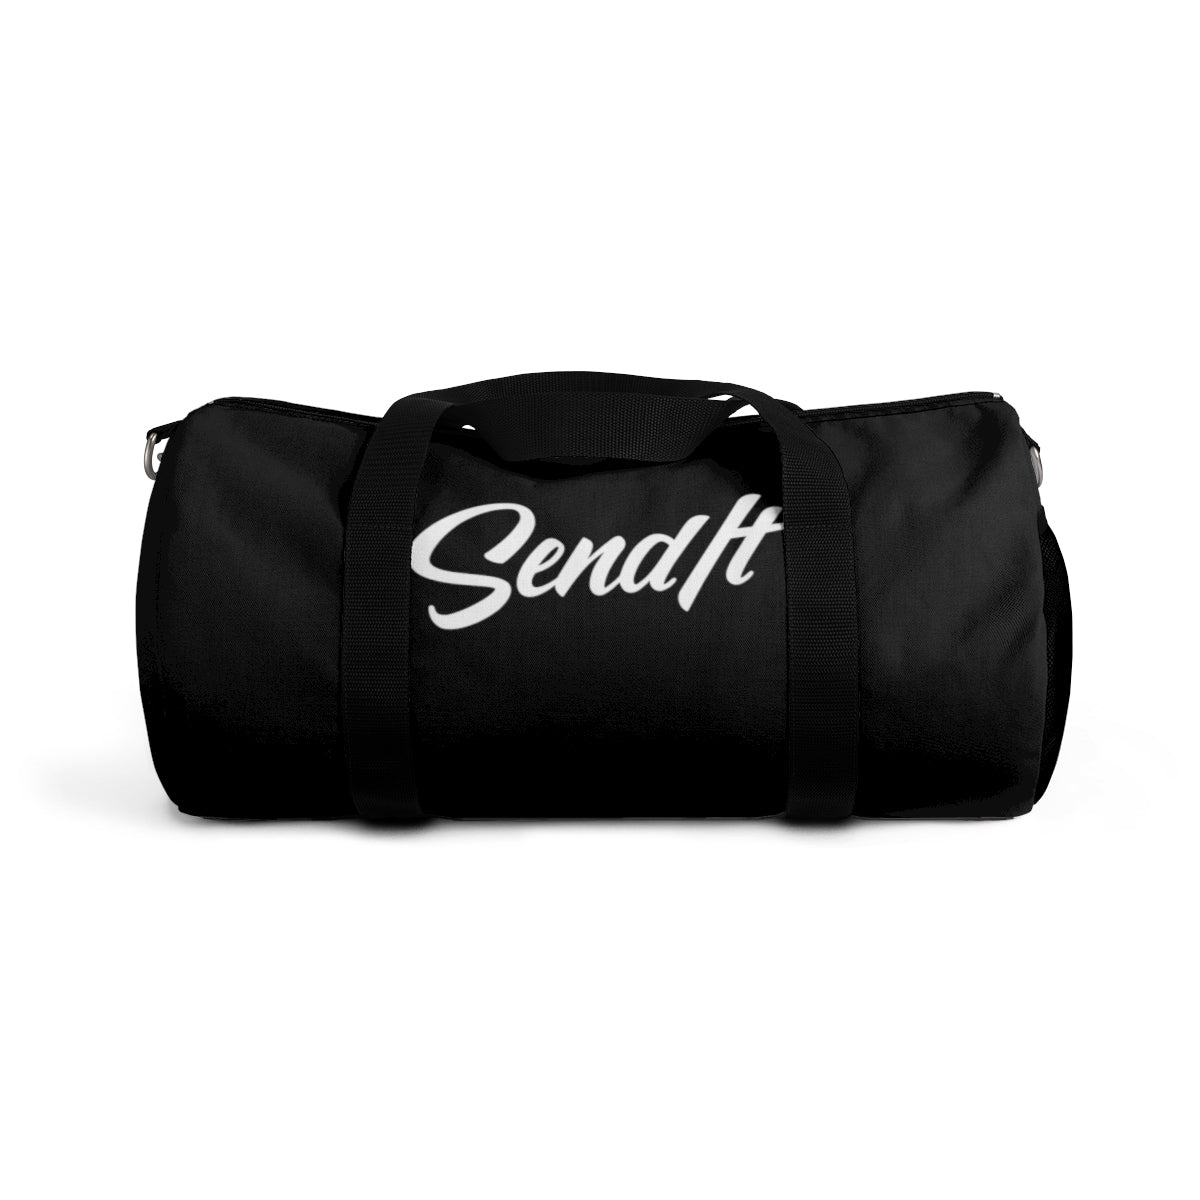 Send My Bag® (@sendmybag) | TikTok